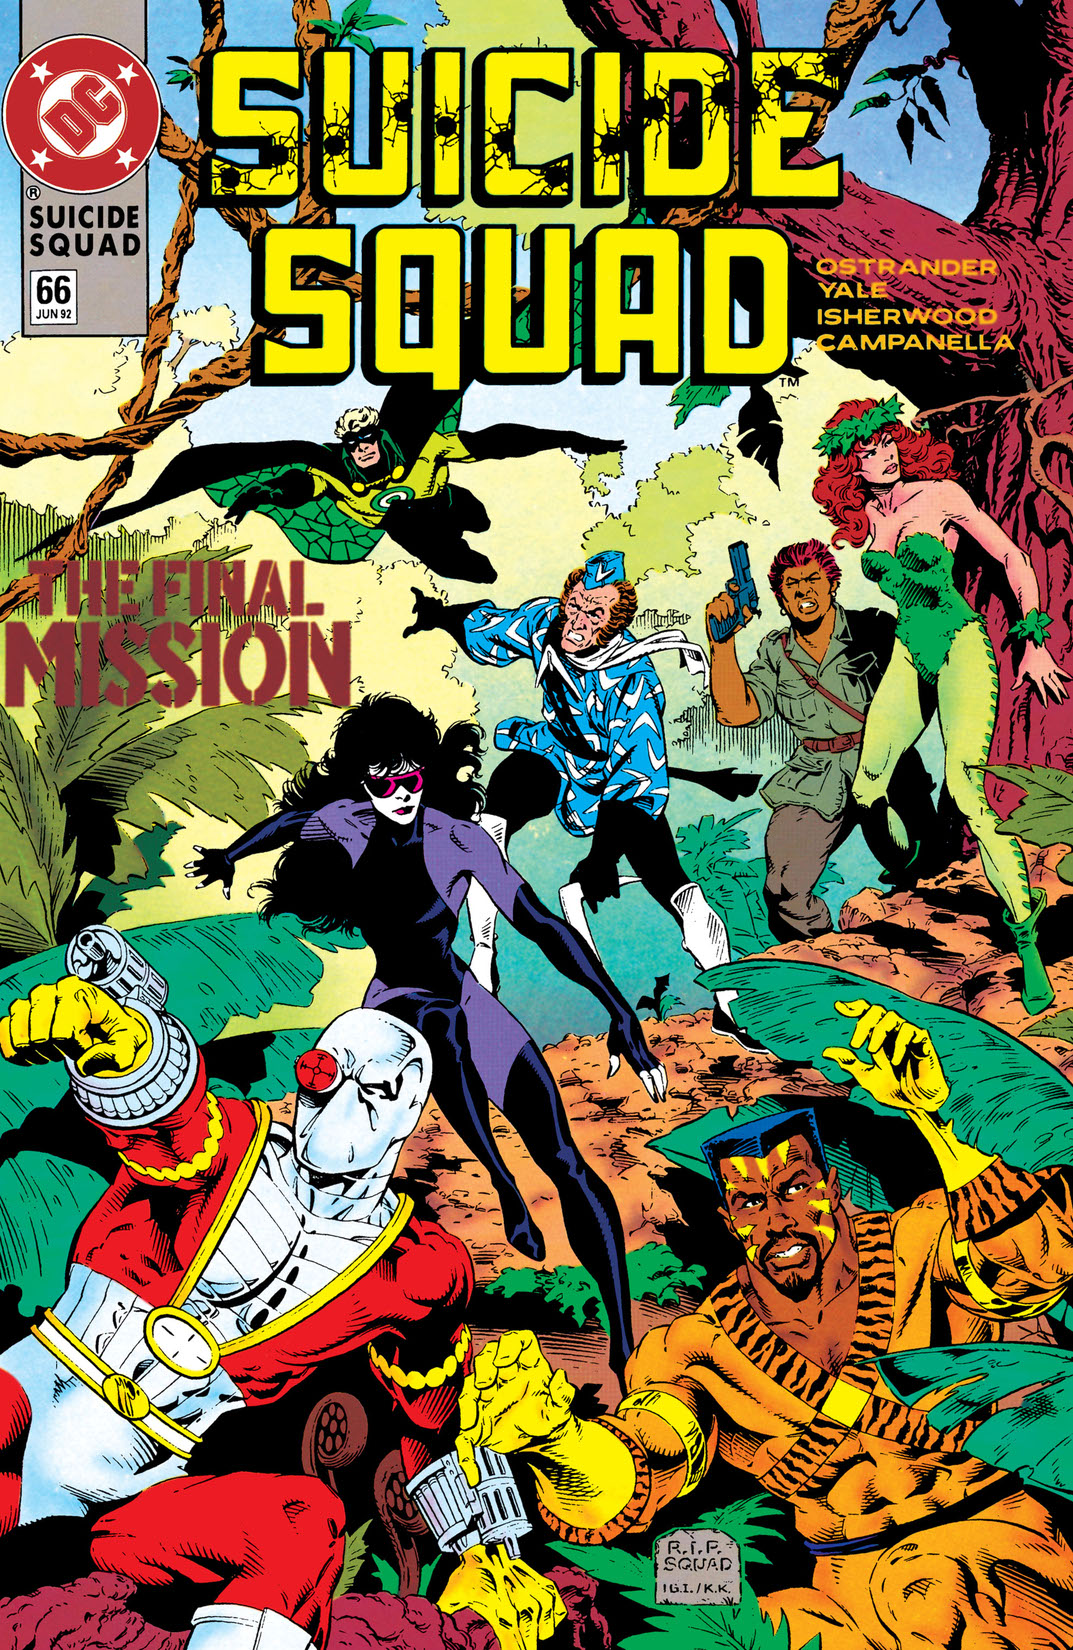 Suicide Squad (1987-2010) #66 preview images